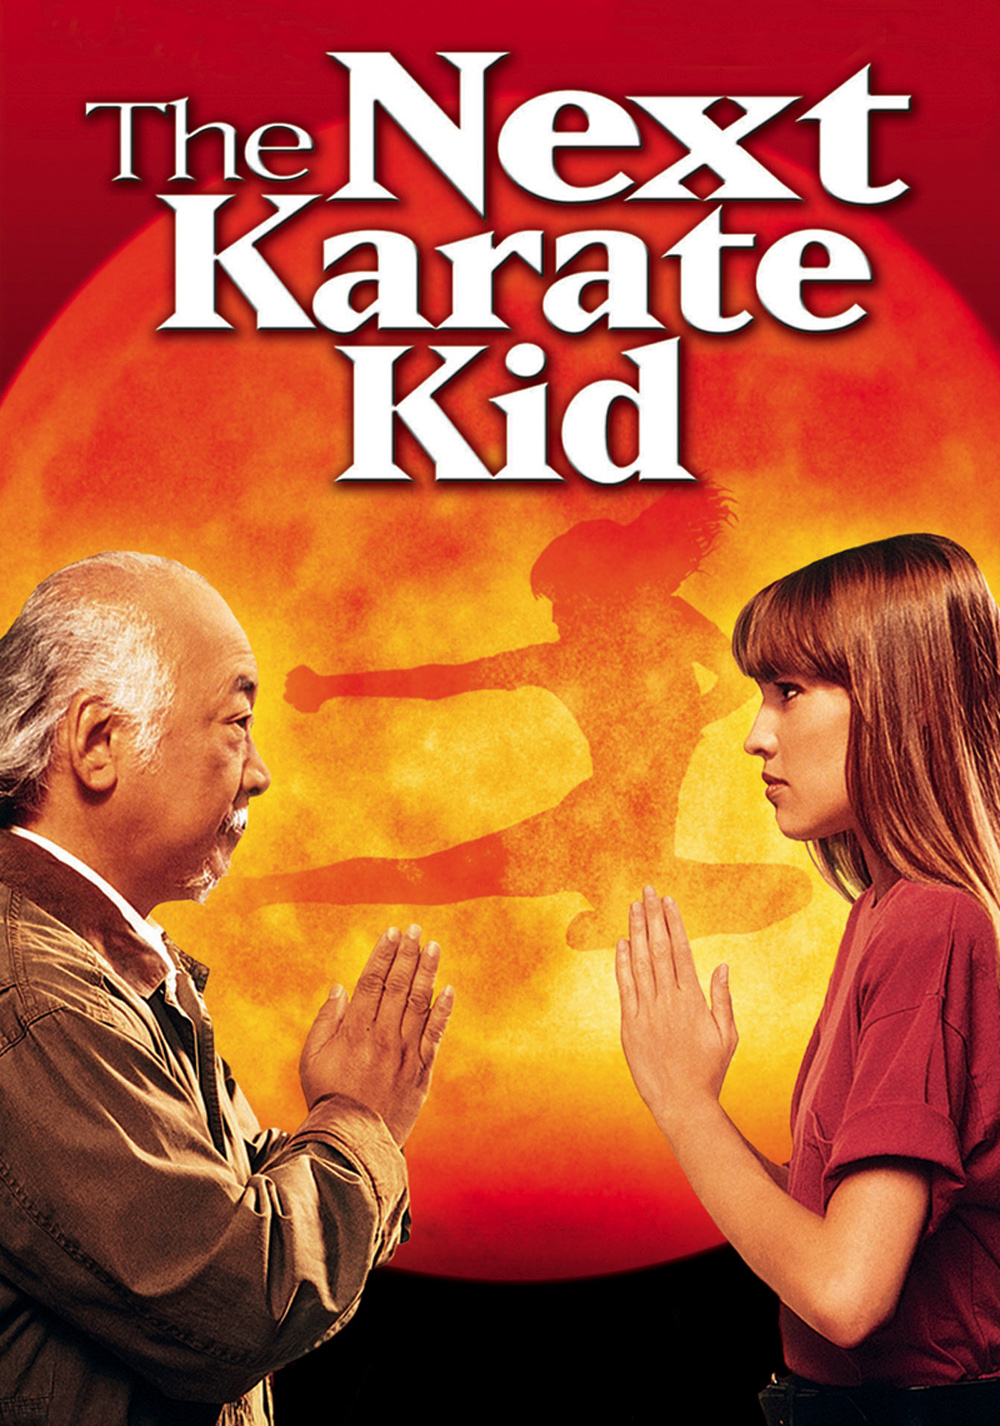 the karate kid movie download mp4